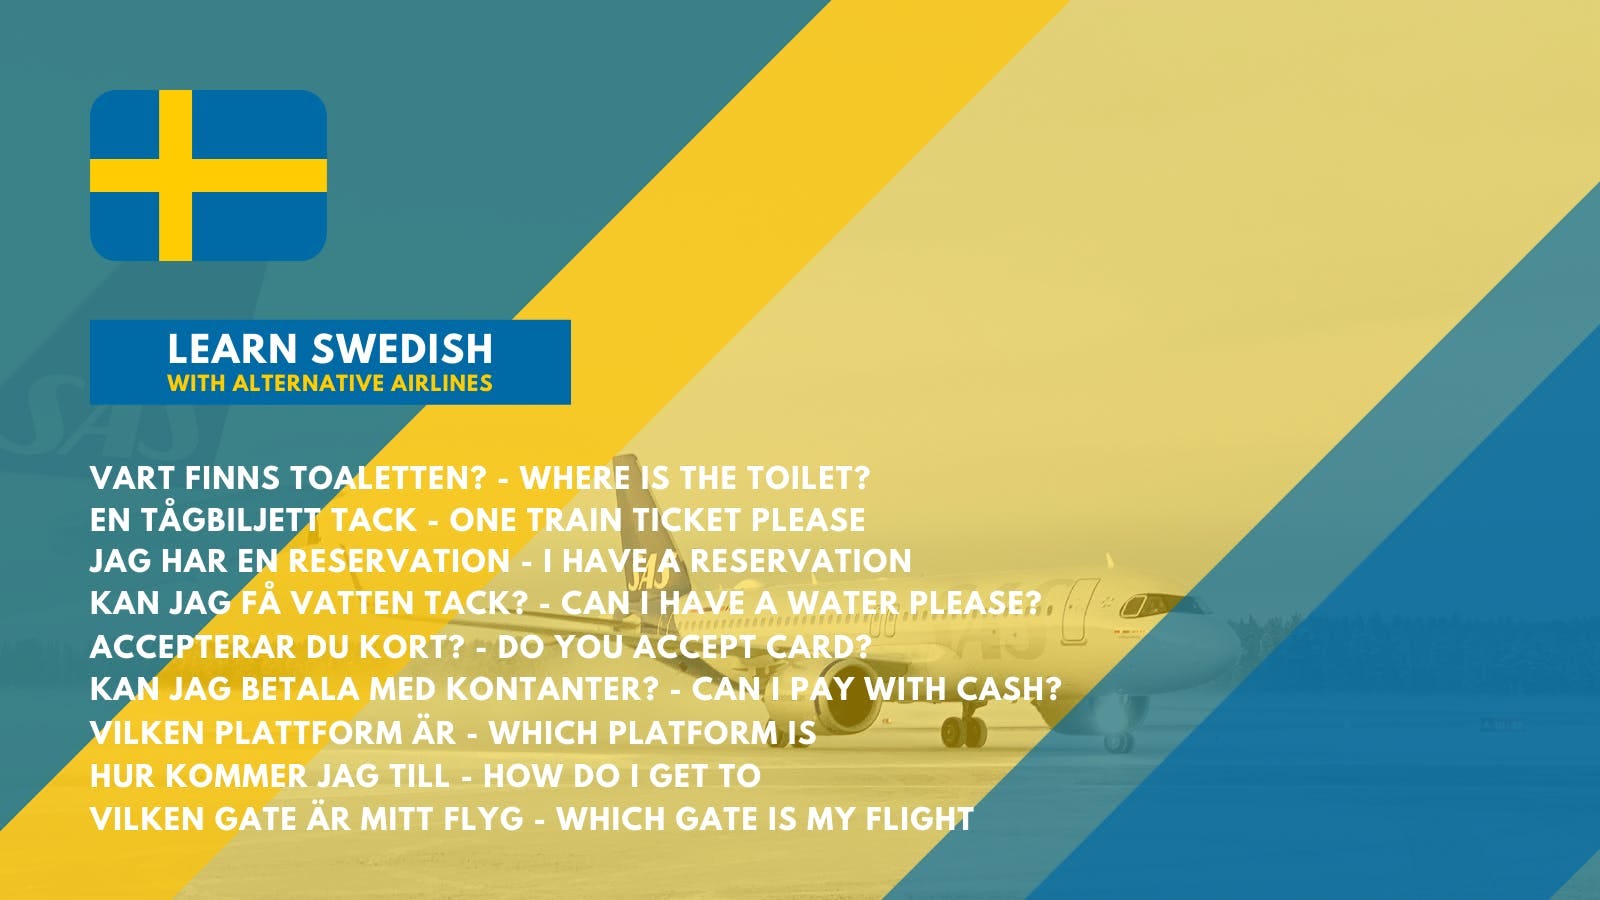 A list of Swedish phrases